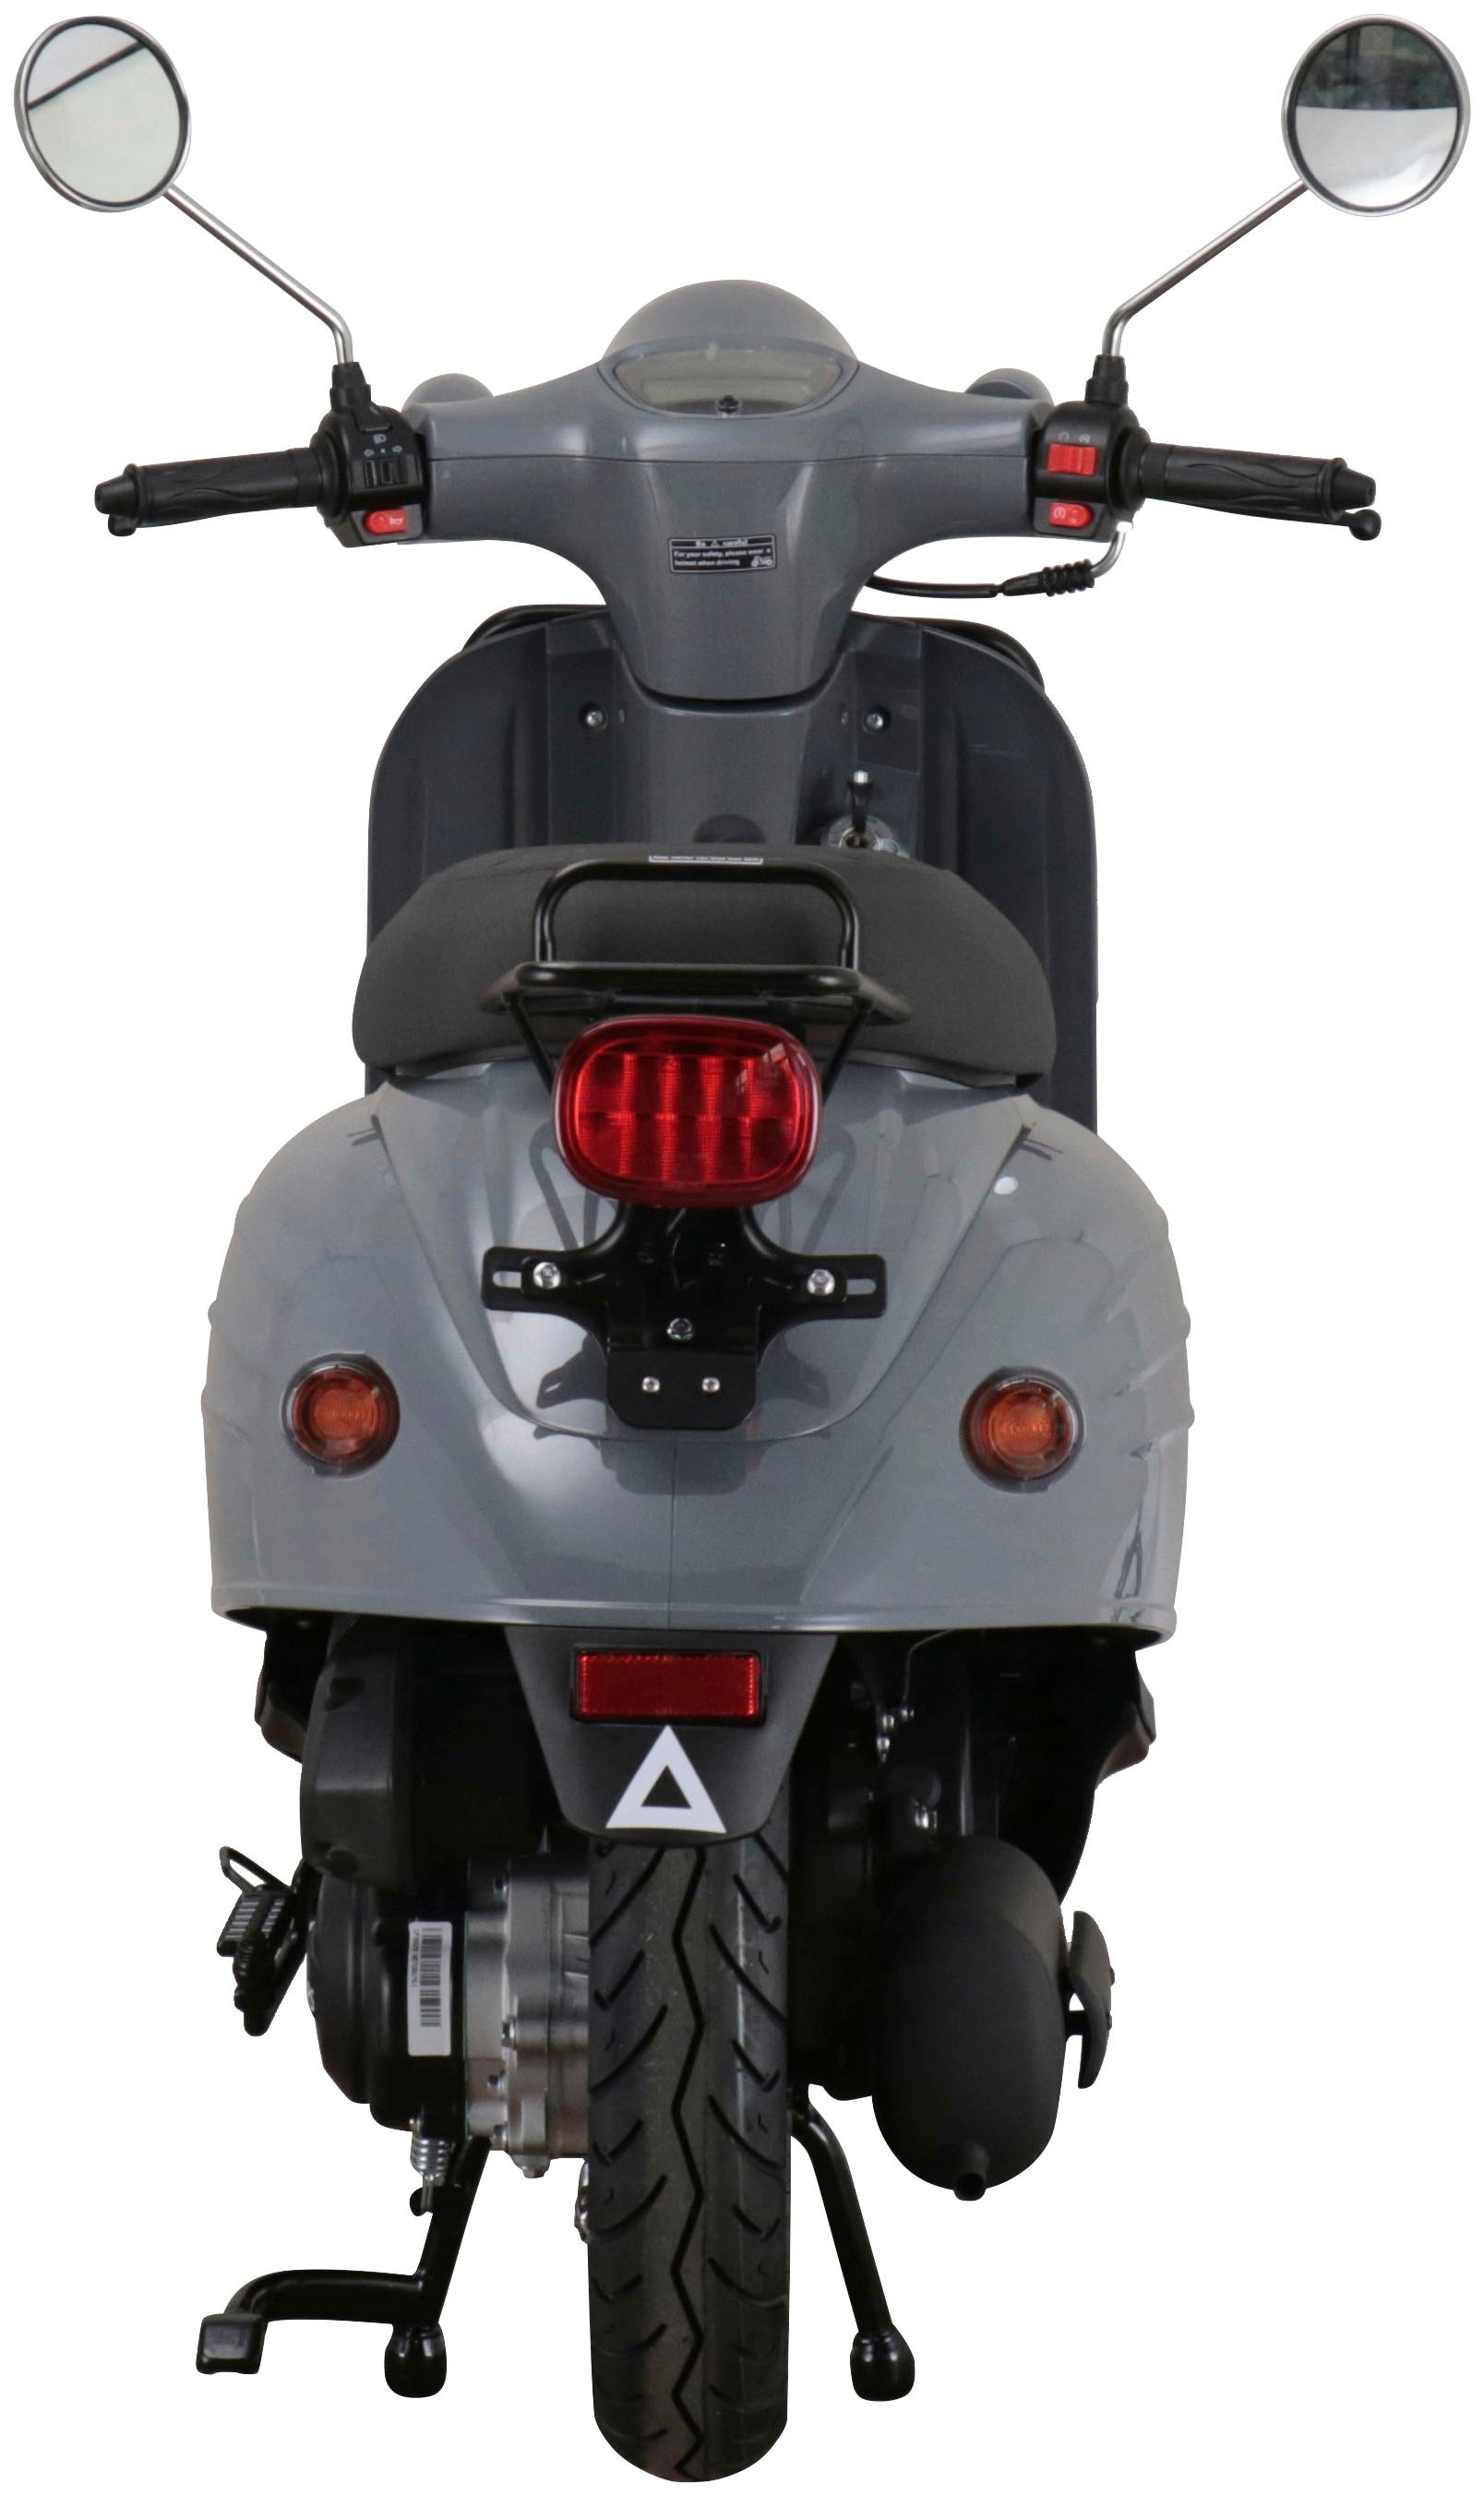 Alpha Motors Motorroller »Adria«, 50 cm³, 45 km/h, Euro 5, 3,1 PS